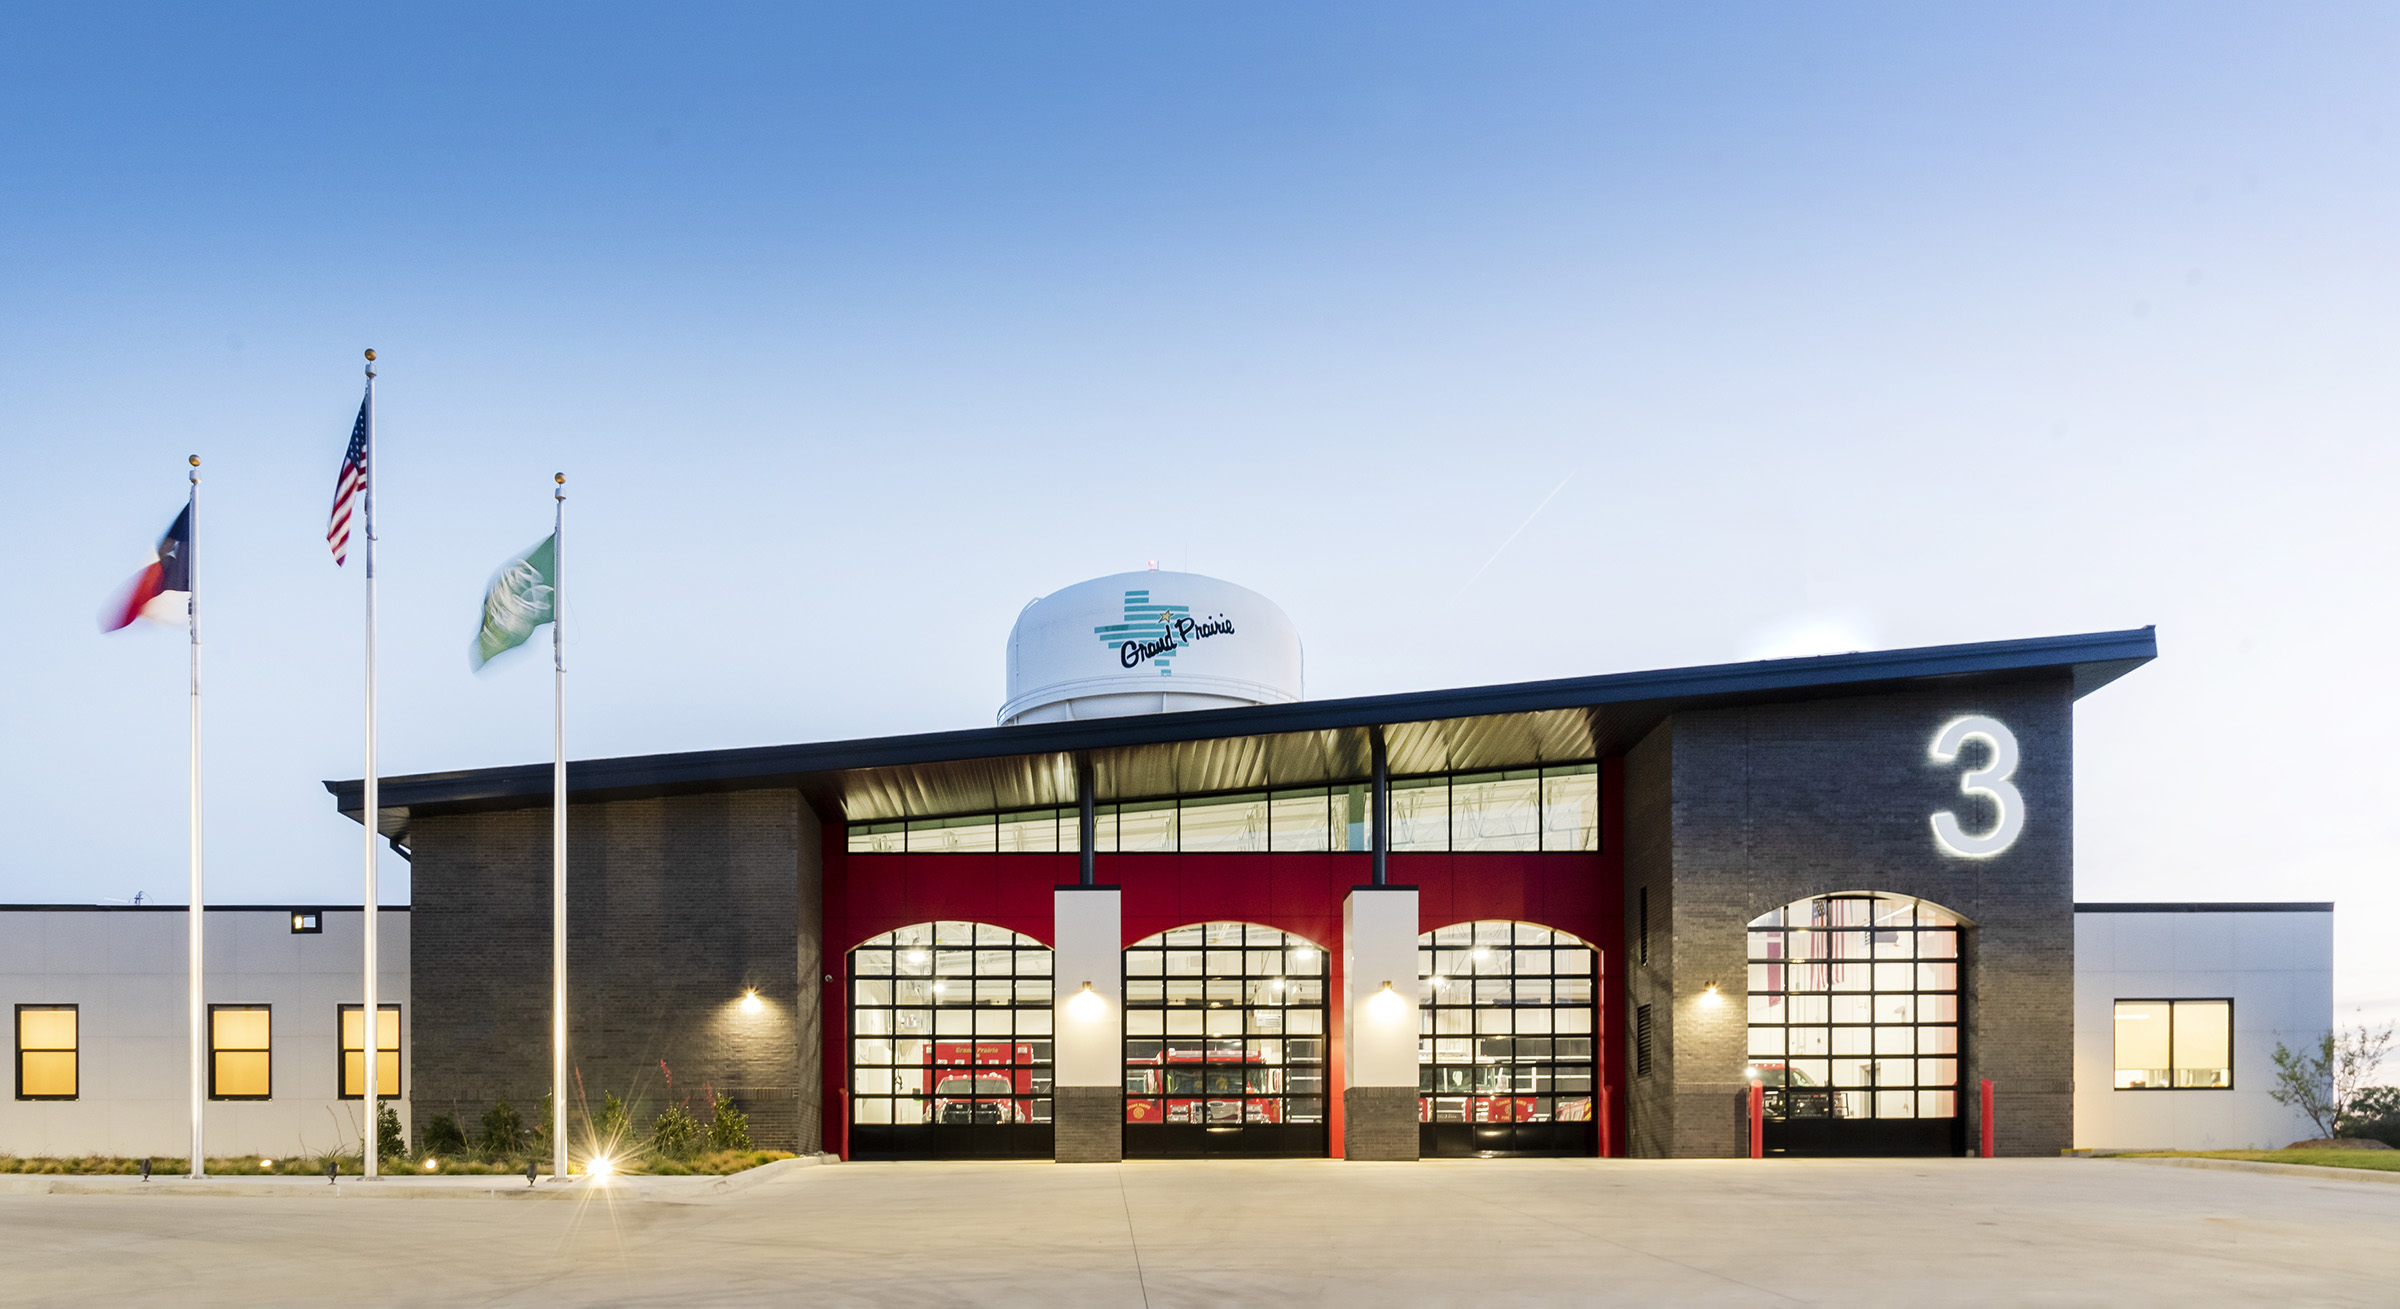 Grand Prairie Fire Station No. 3